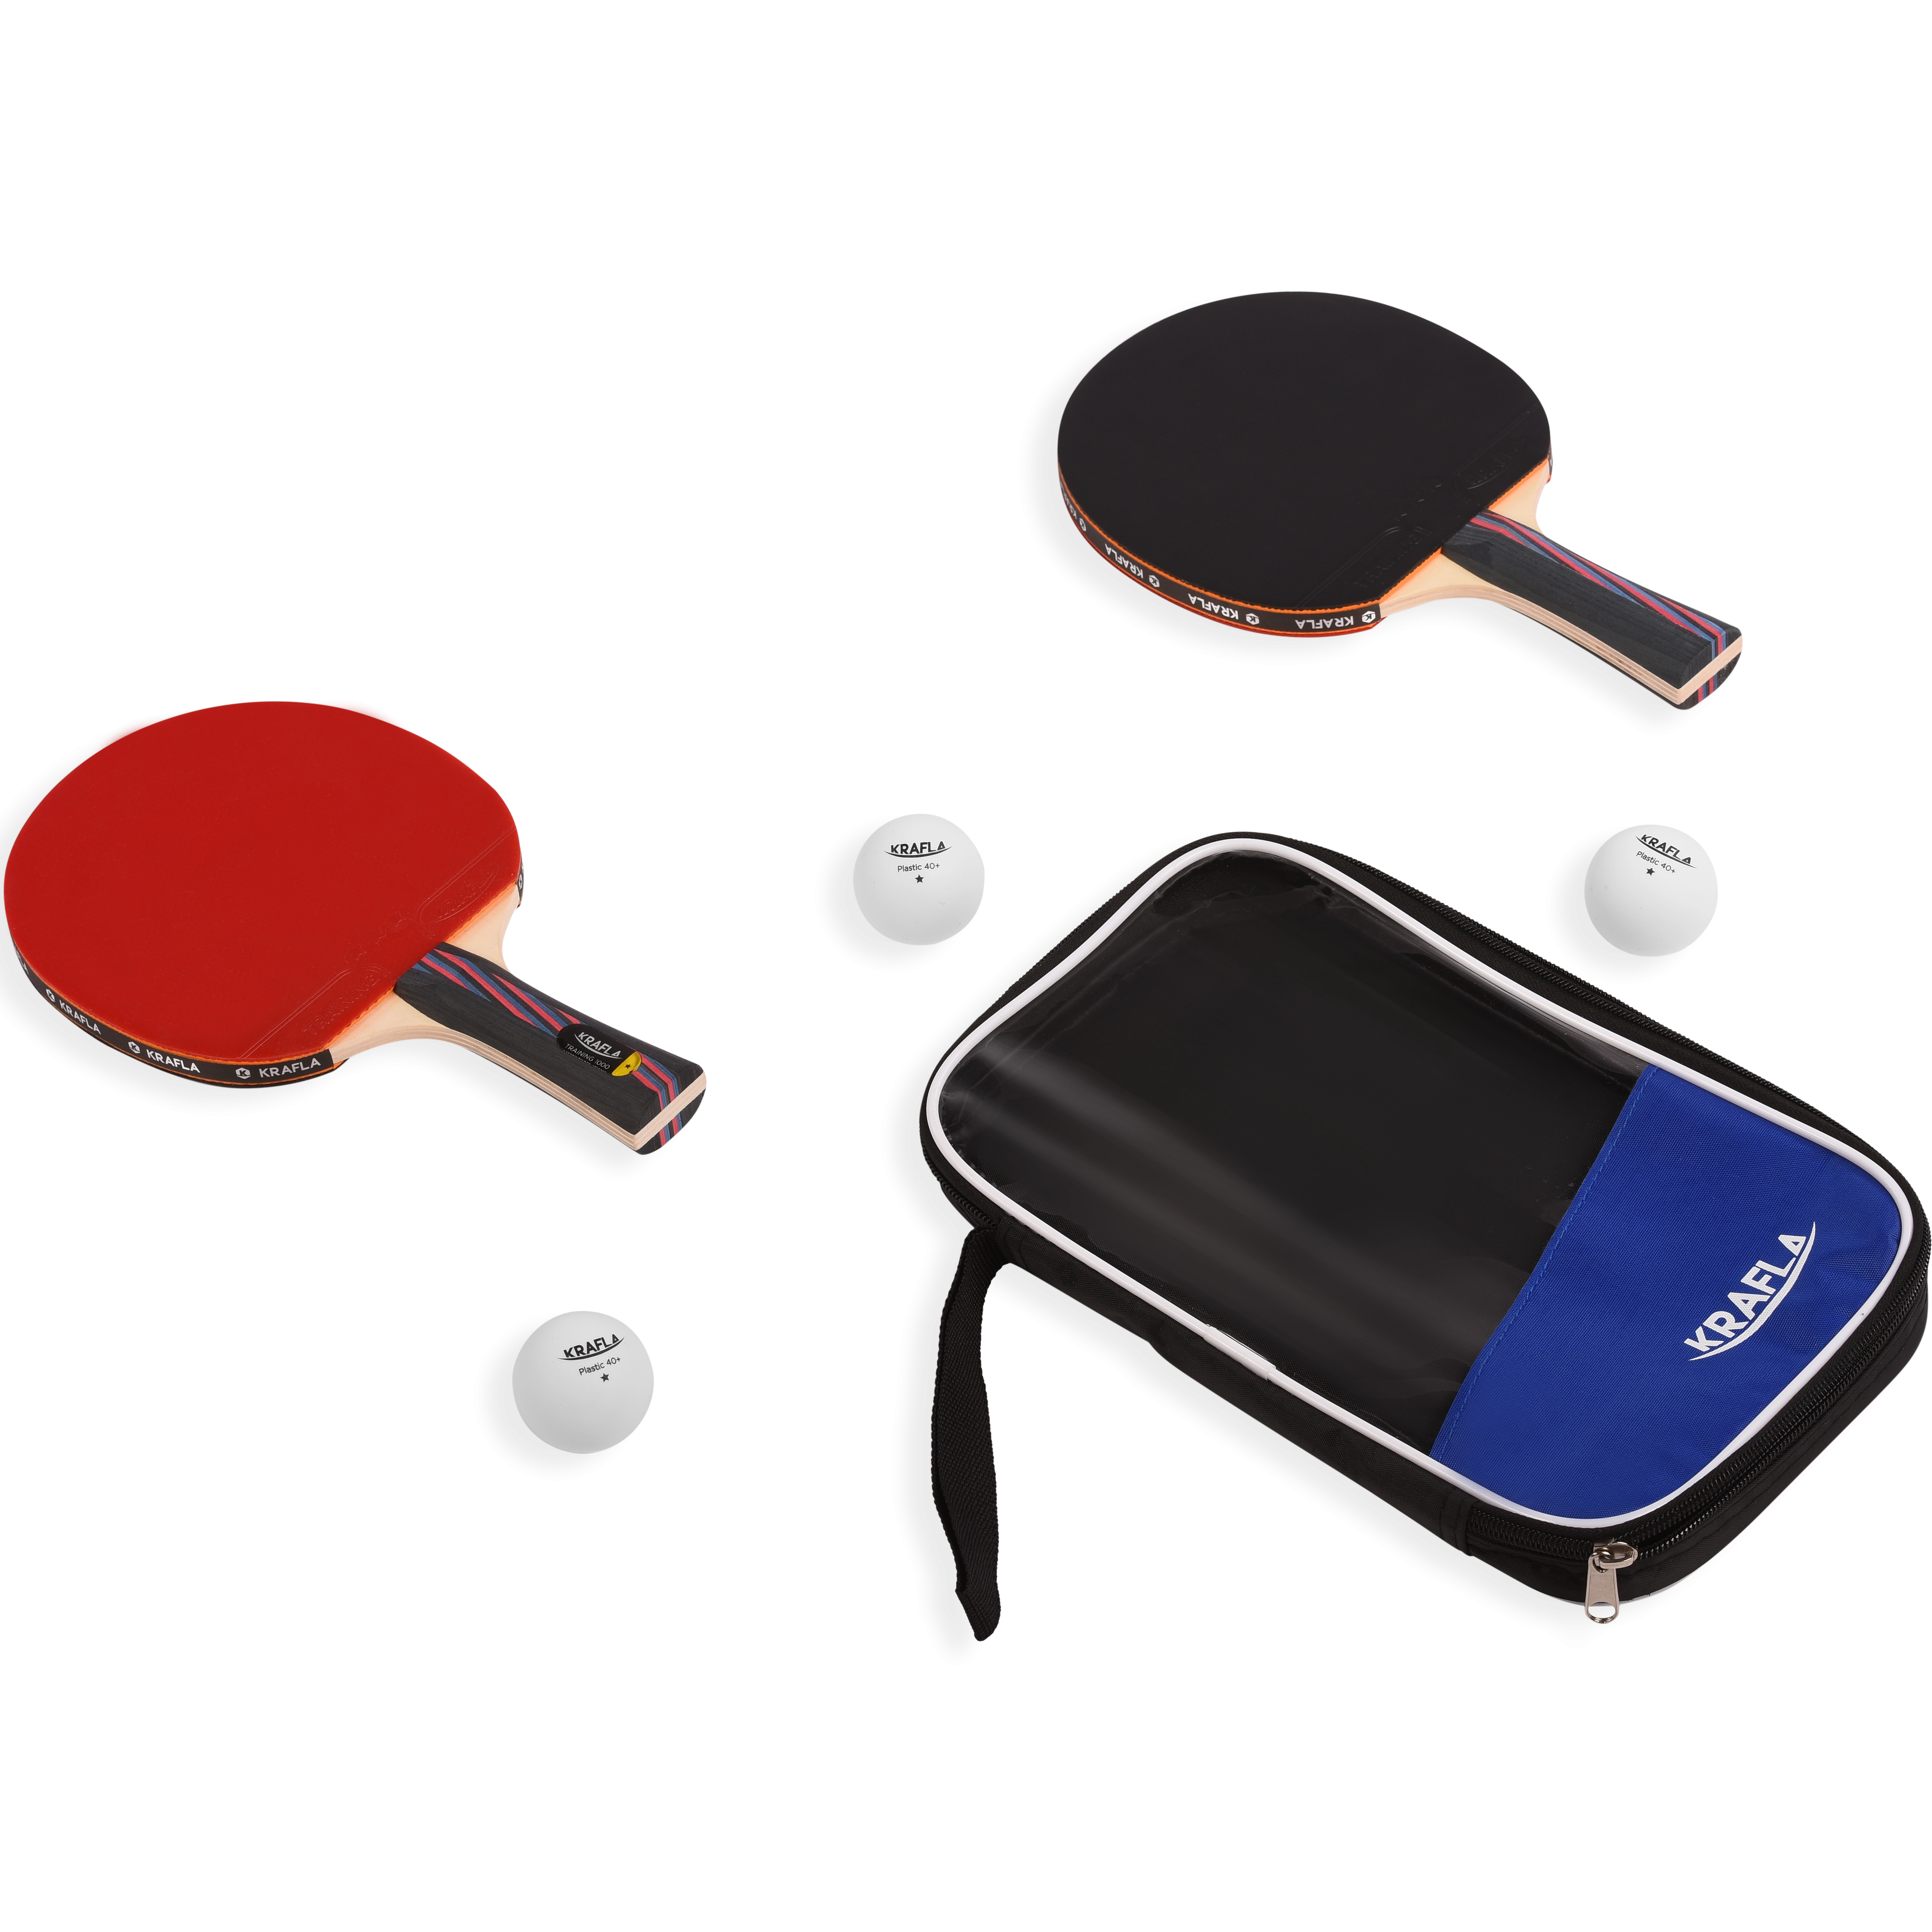 KRAFLA S-T1000 Набор для настольного тенниса (ракетки 2шт., мяч 3шт., чехол) с гарантией